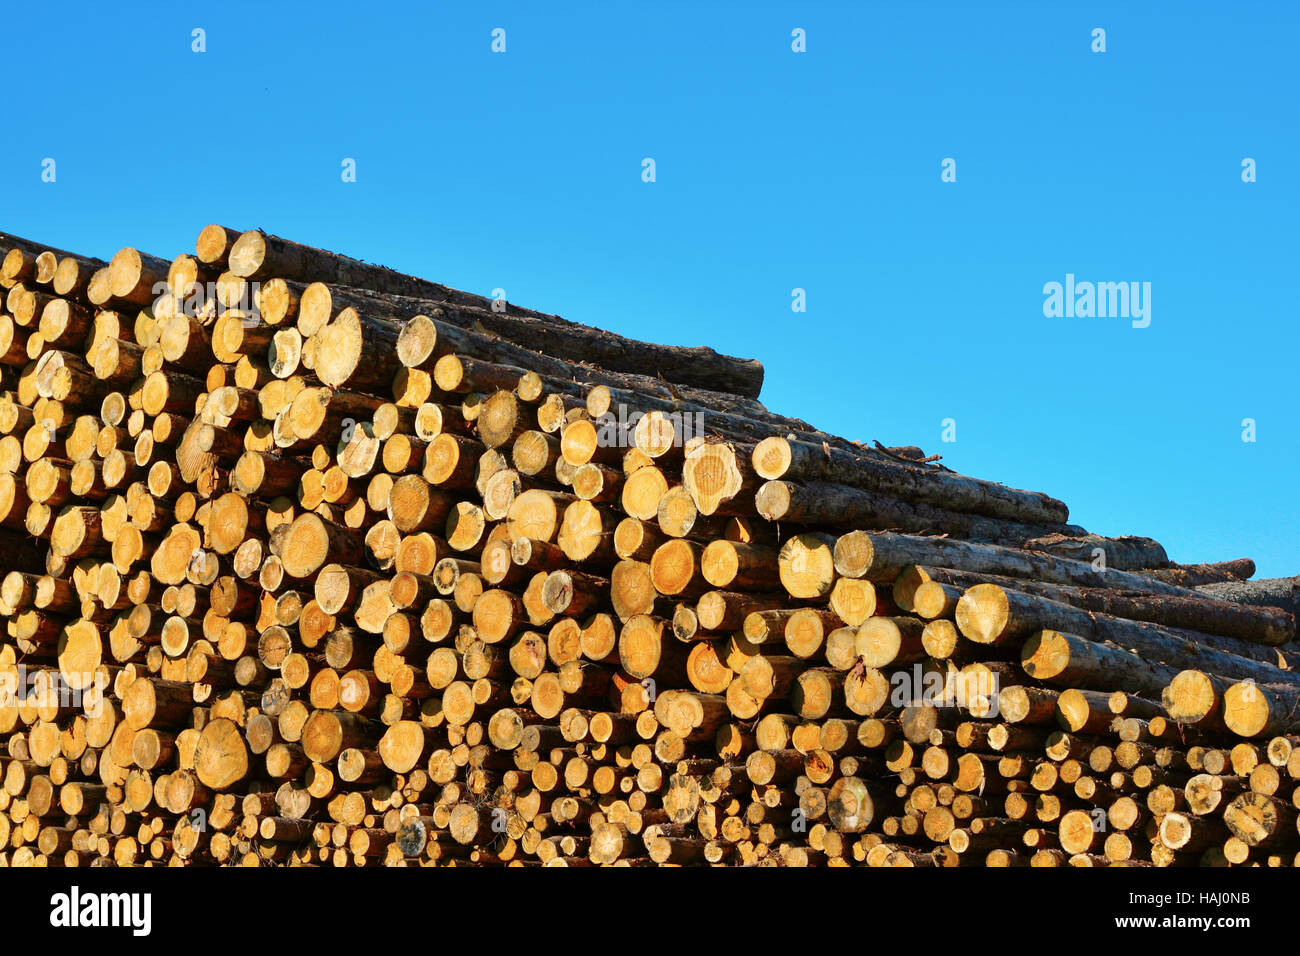 Heap of timber logs Stock Photo